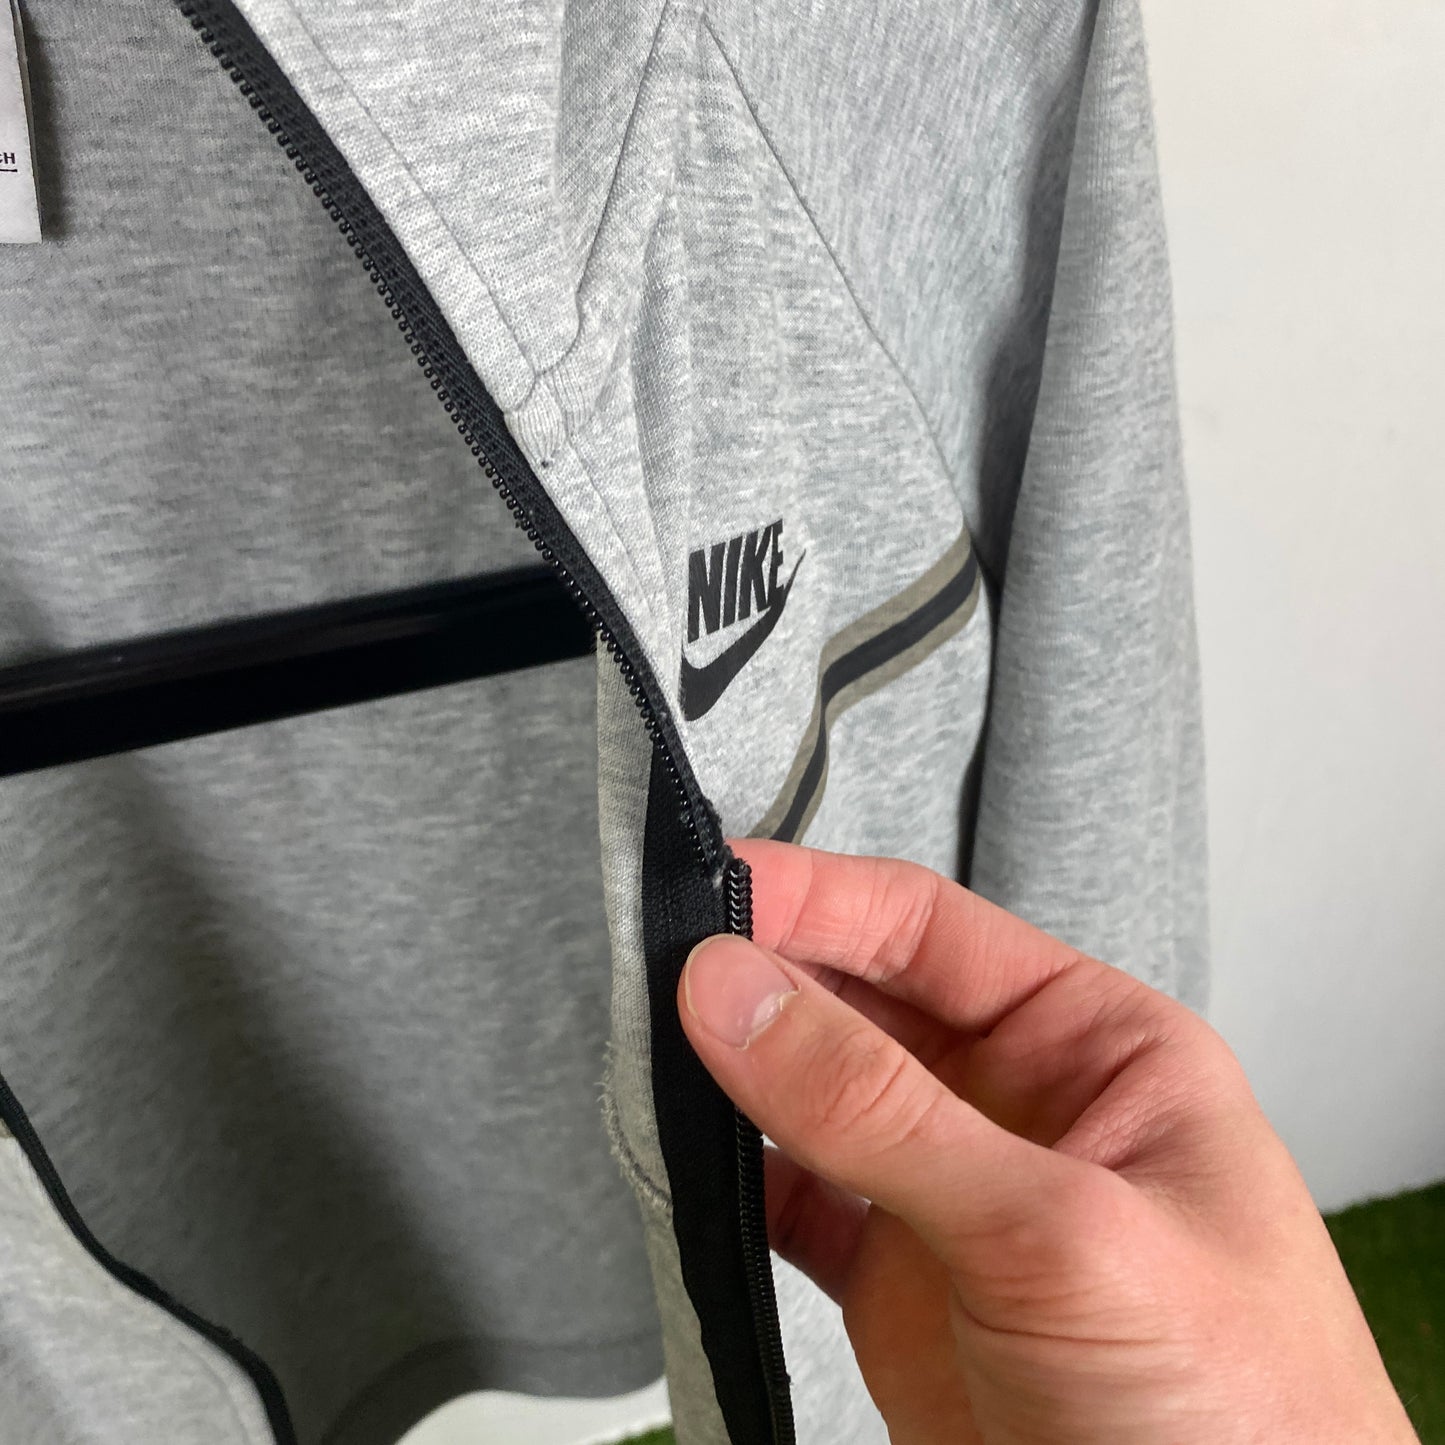 00s Nike Tech Fleece Hoodie Grey Small